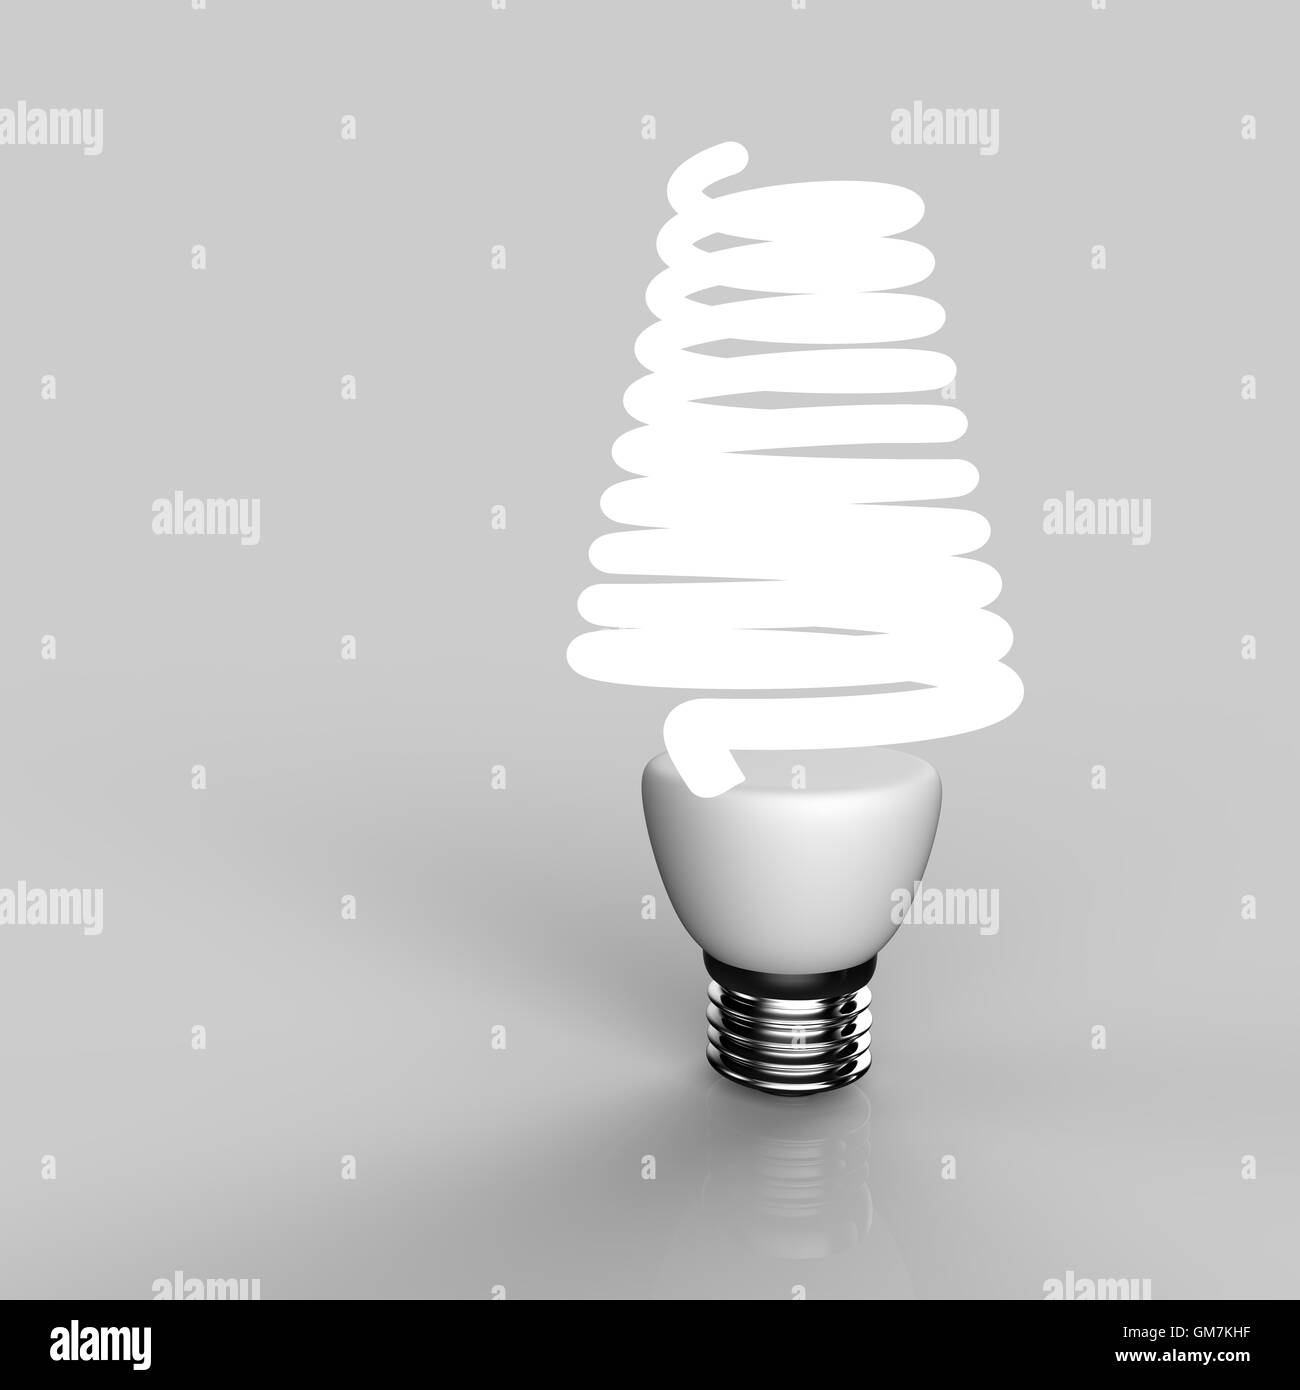 Energy saving light bulb Stock Photo